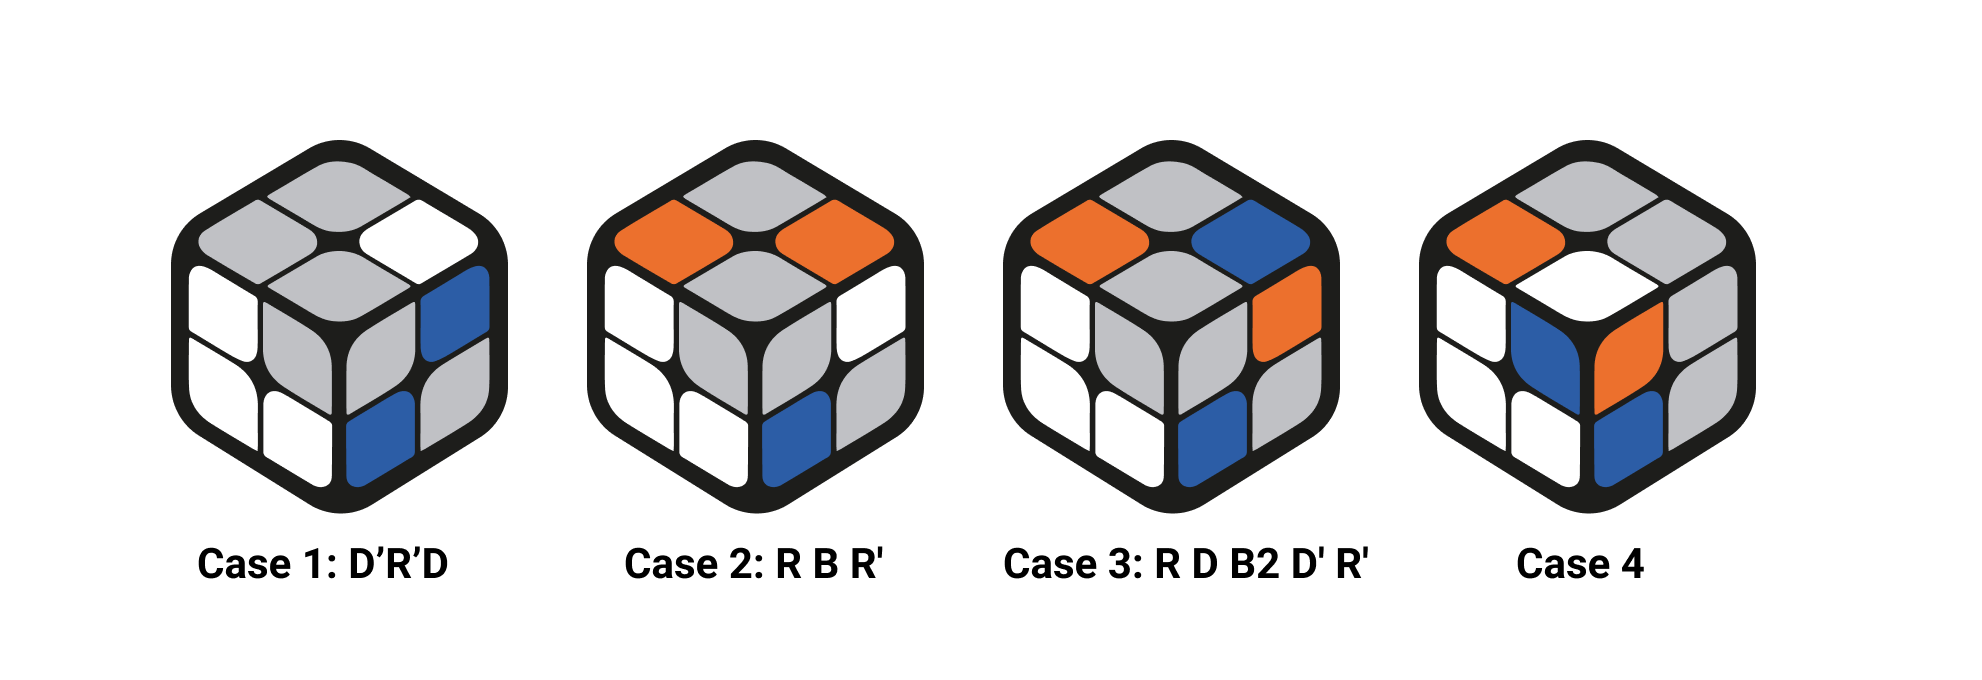 How to Solve 2x2 Rubik's Cube GoCube